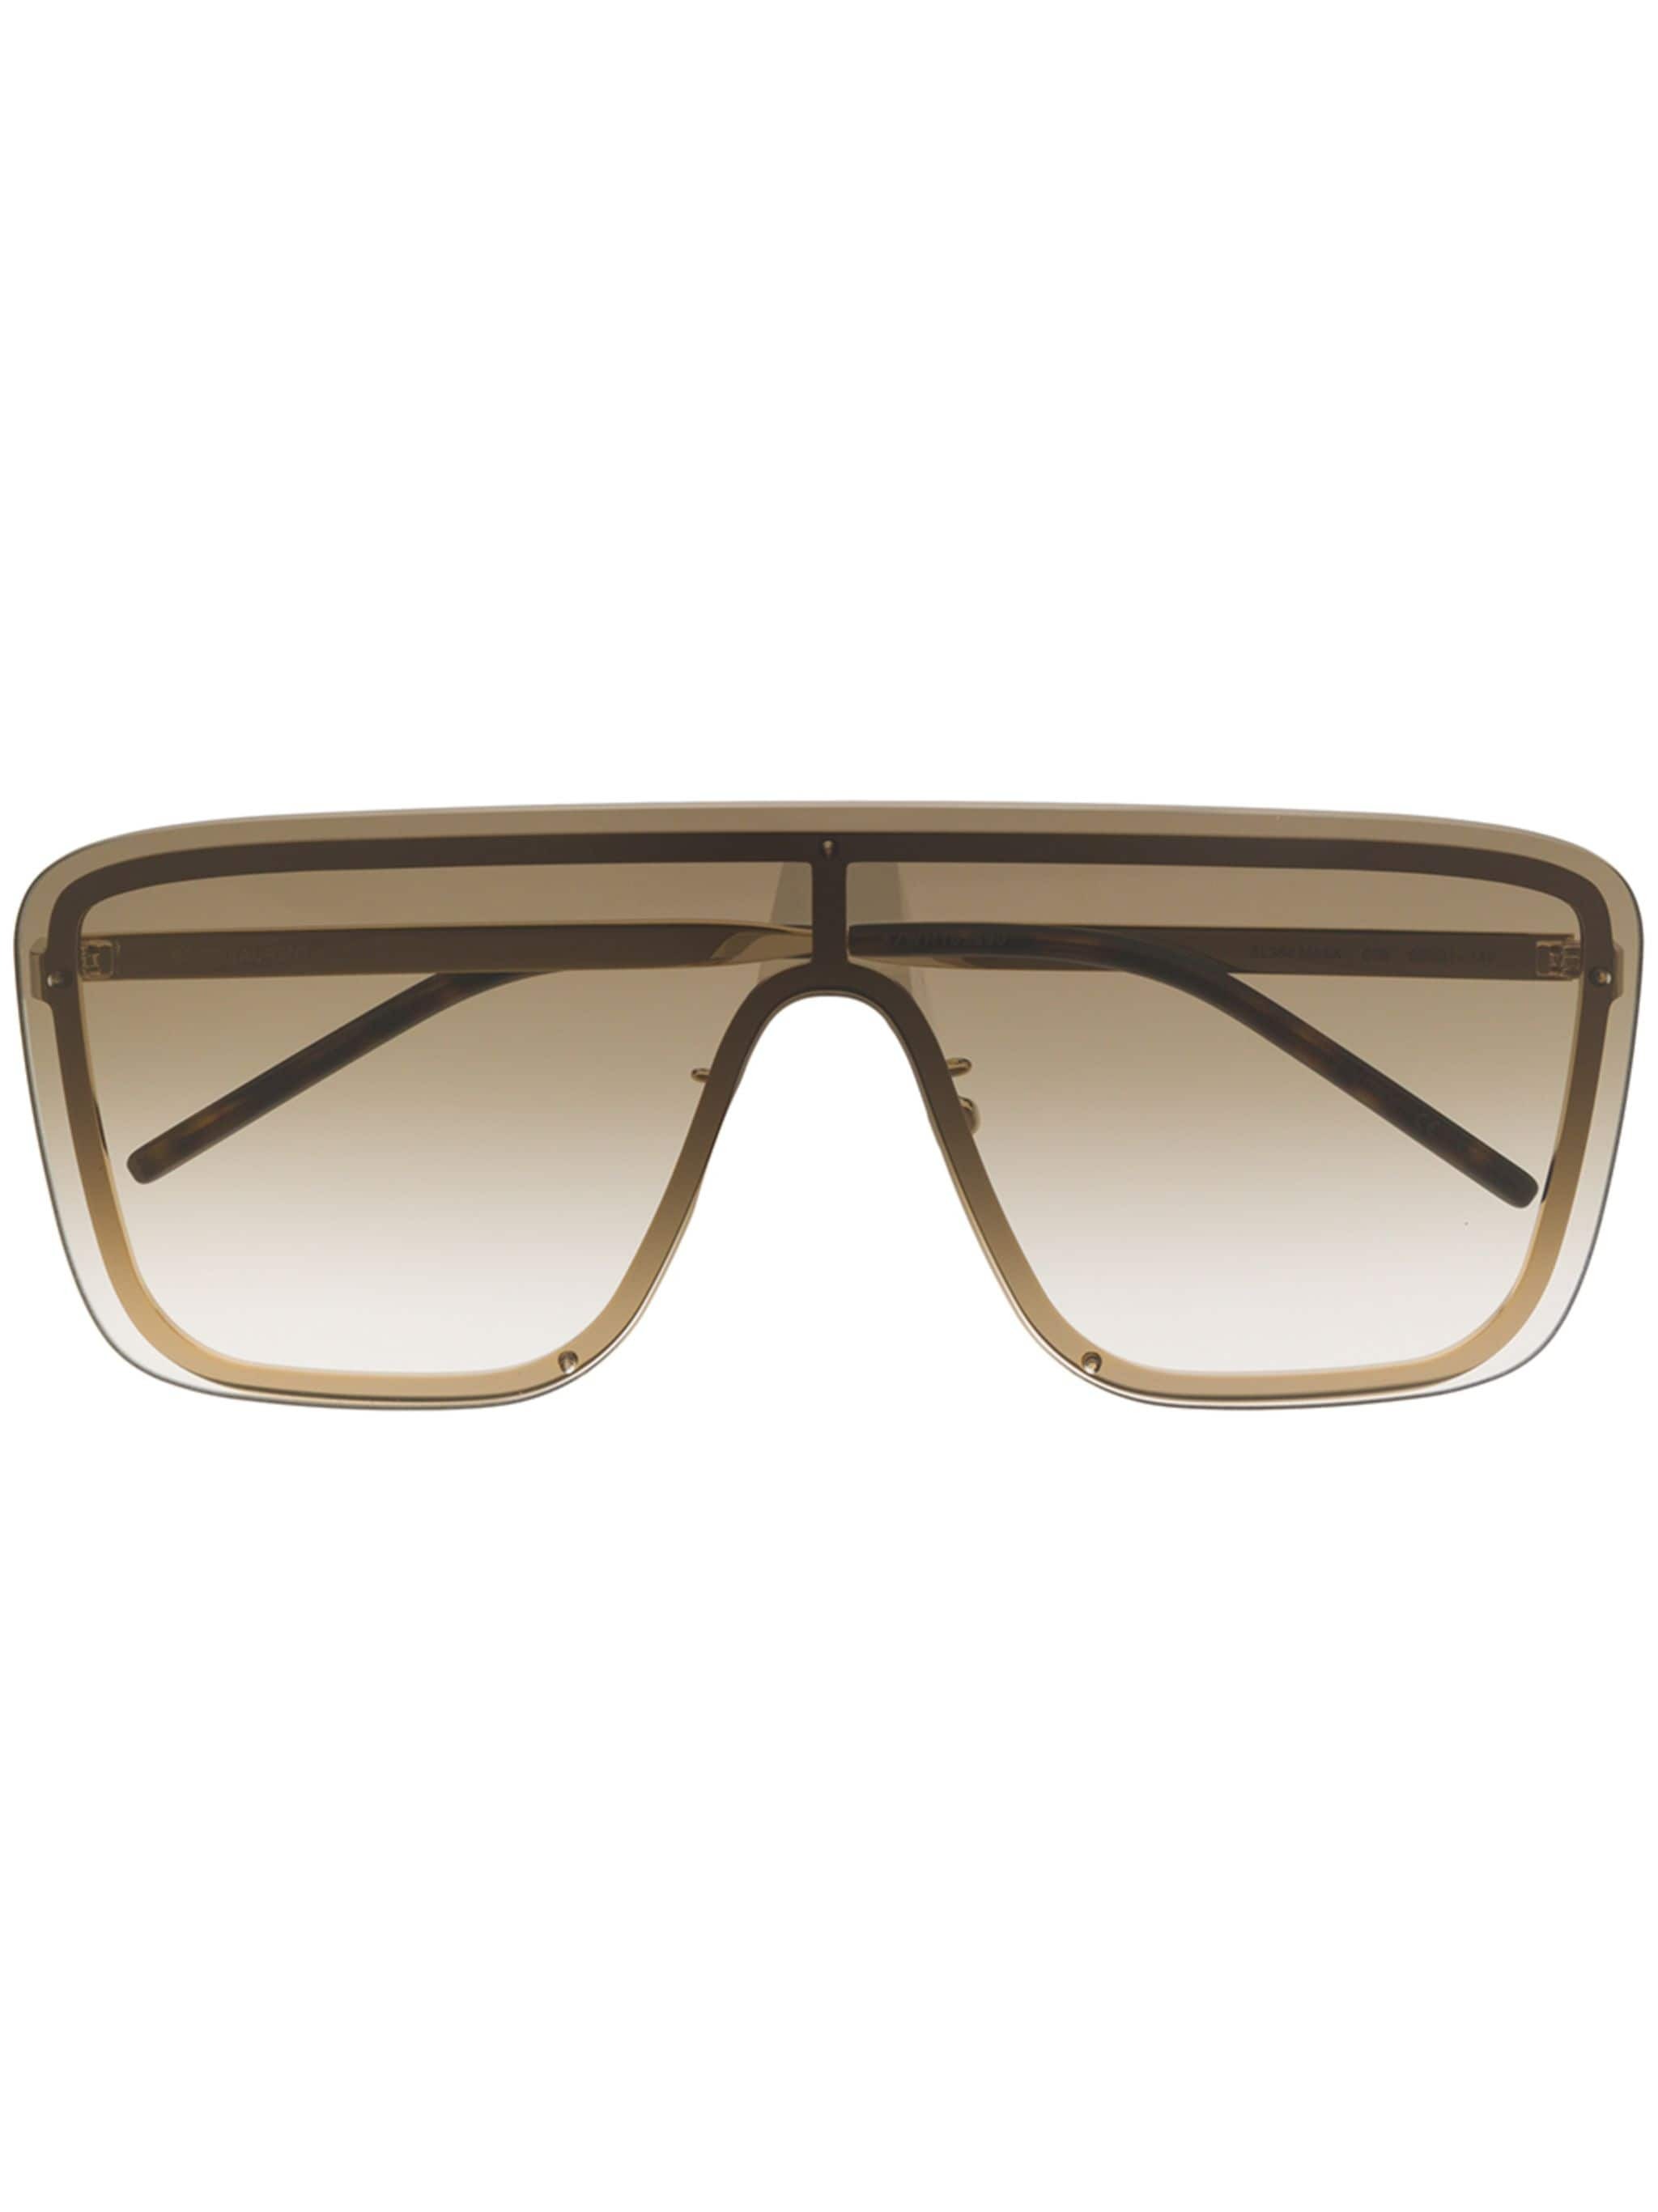 SL 364 sunglasses